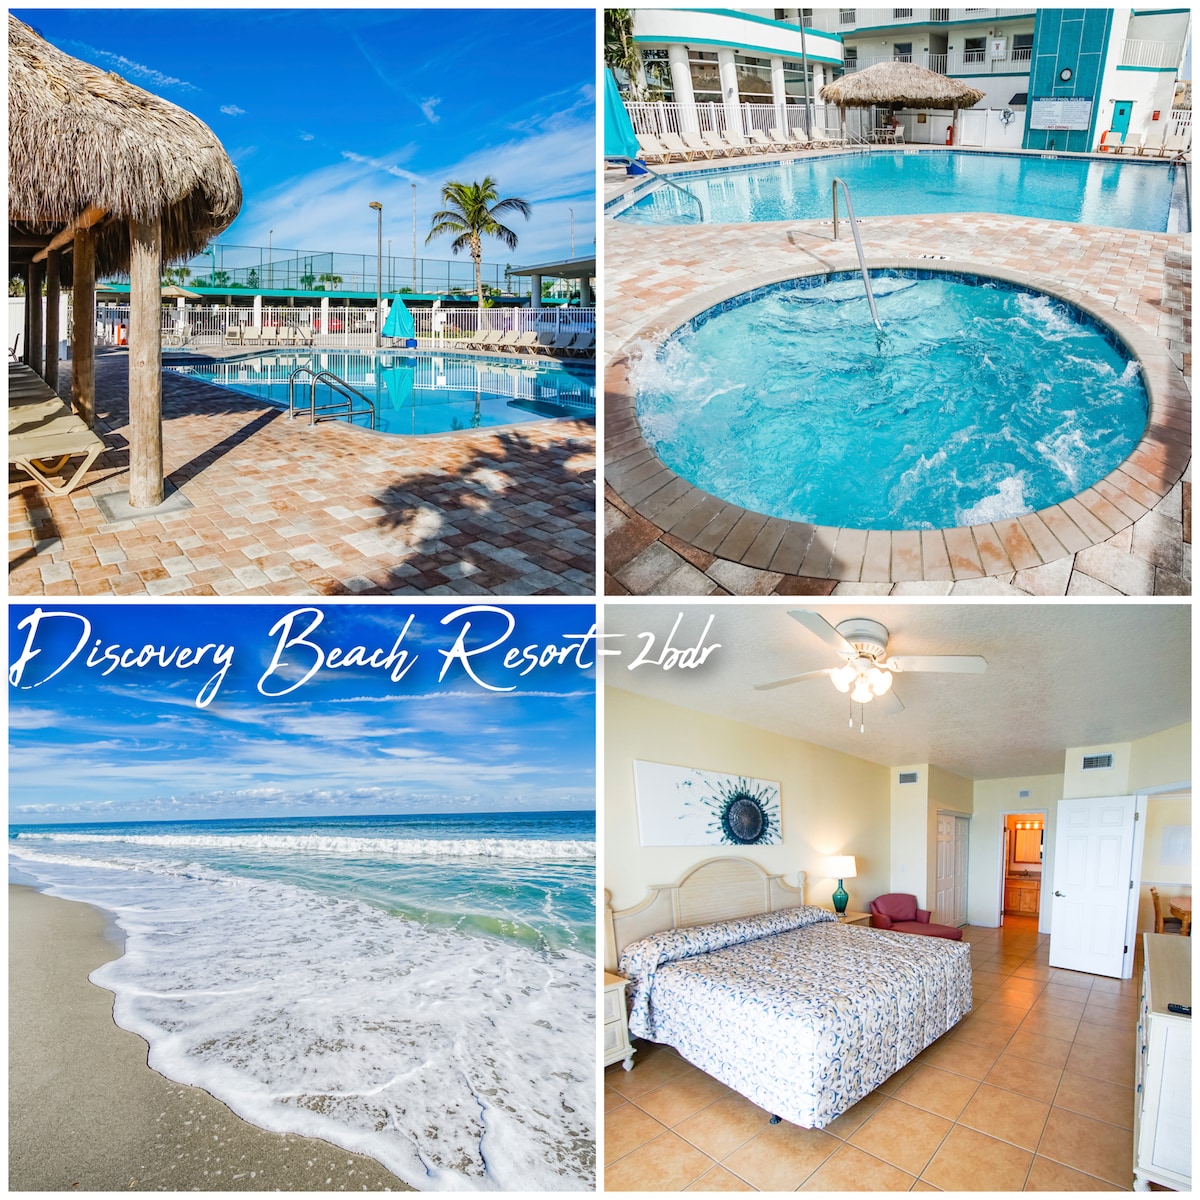 *Fabulous 2 BR Condo - Discovery Beach Resort!